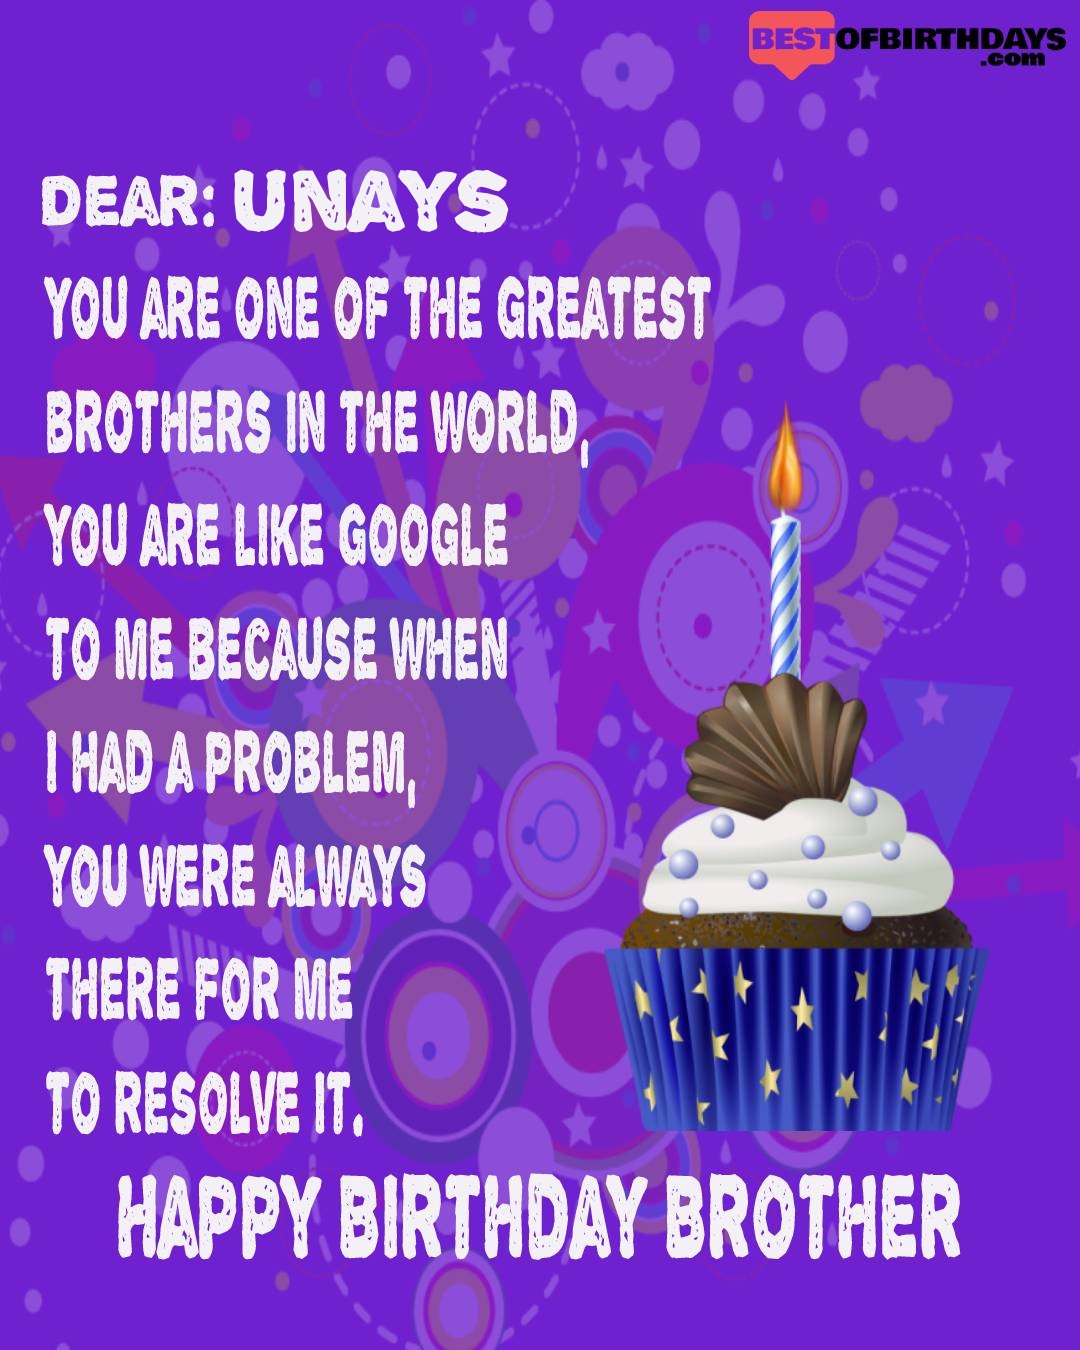 Happy birthday unays bhai brother bro